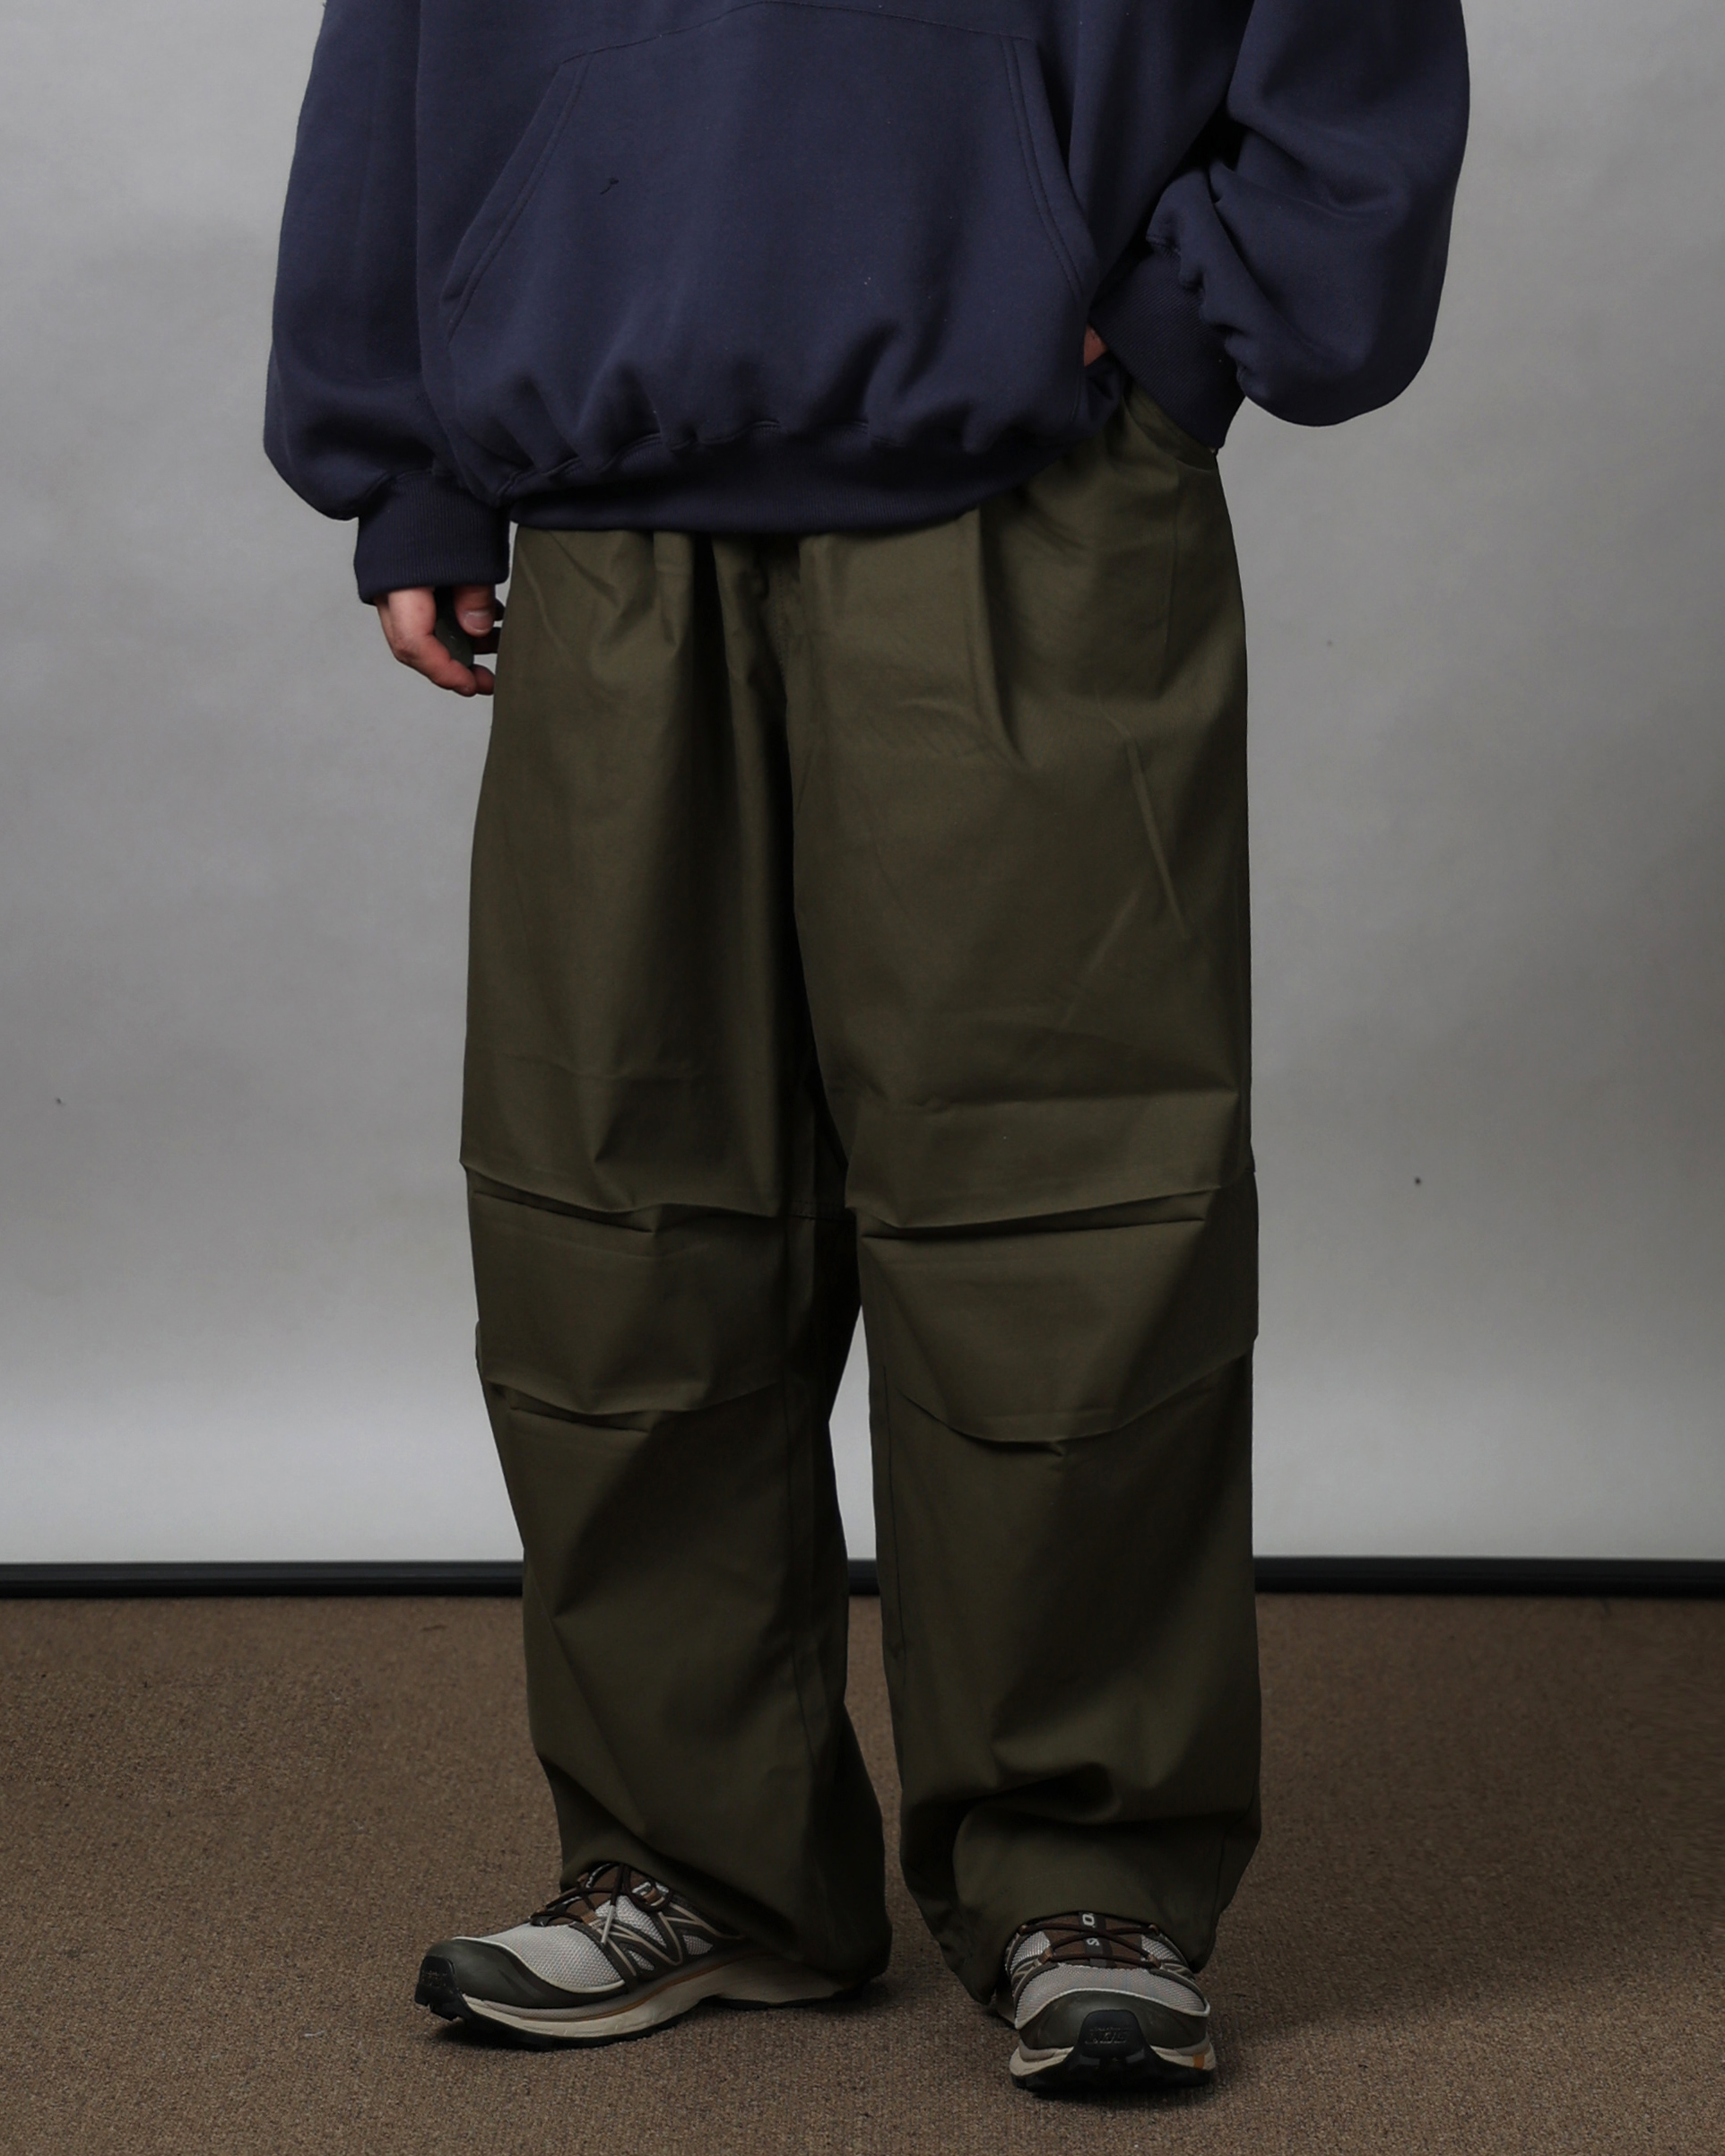 WAOT Bulky Cotton Parachute Pants (Black/Olive/Gray/Beige) - 10차 리오더 (5/1 배송예정)